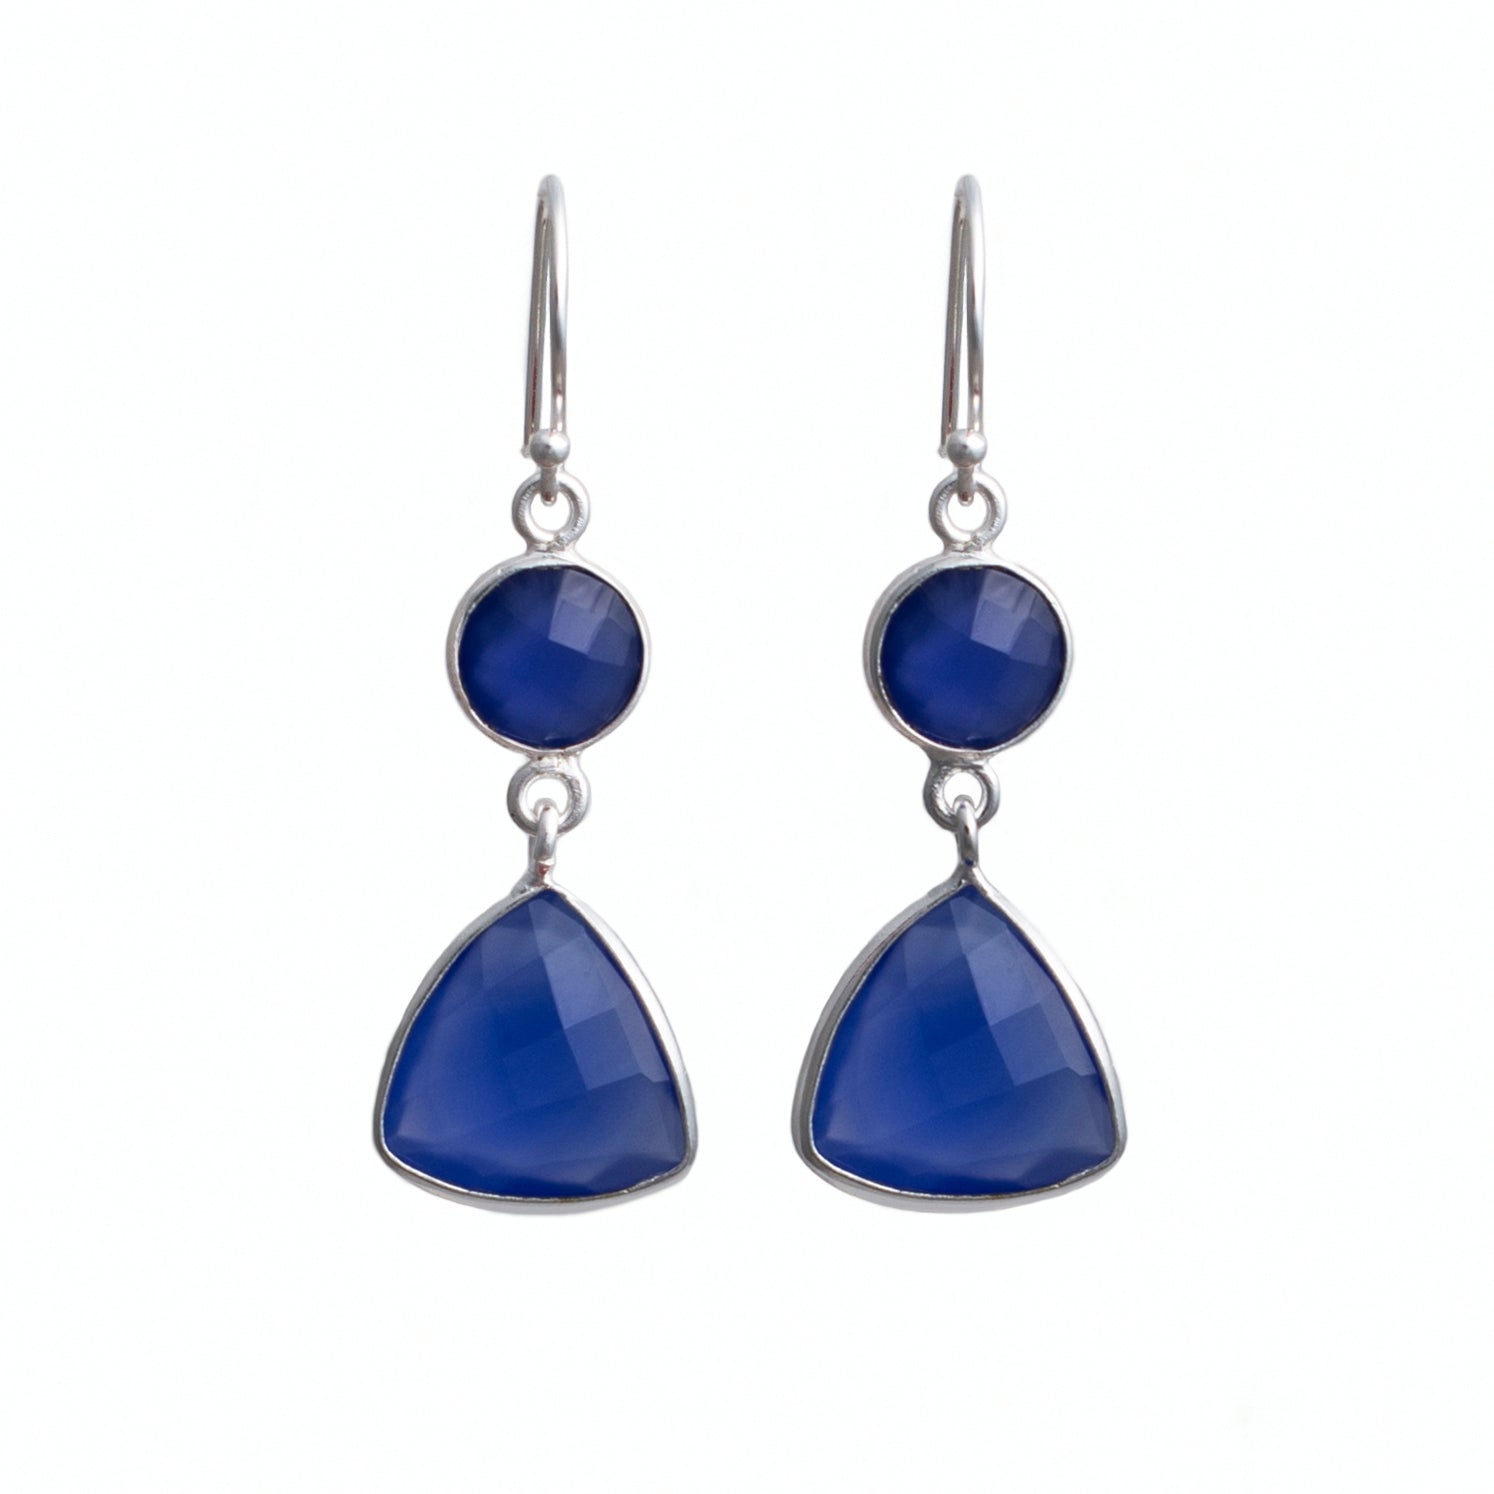 Blue Chalcedony Gemstone Earrings in Sterling Silver - Triangular